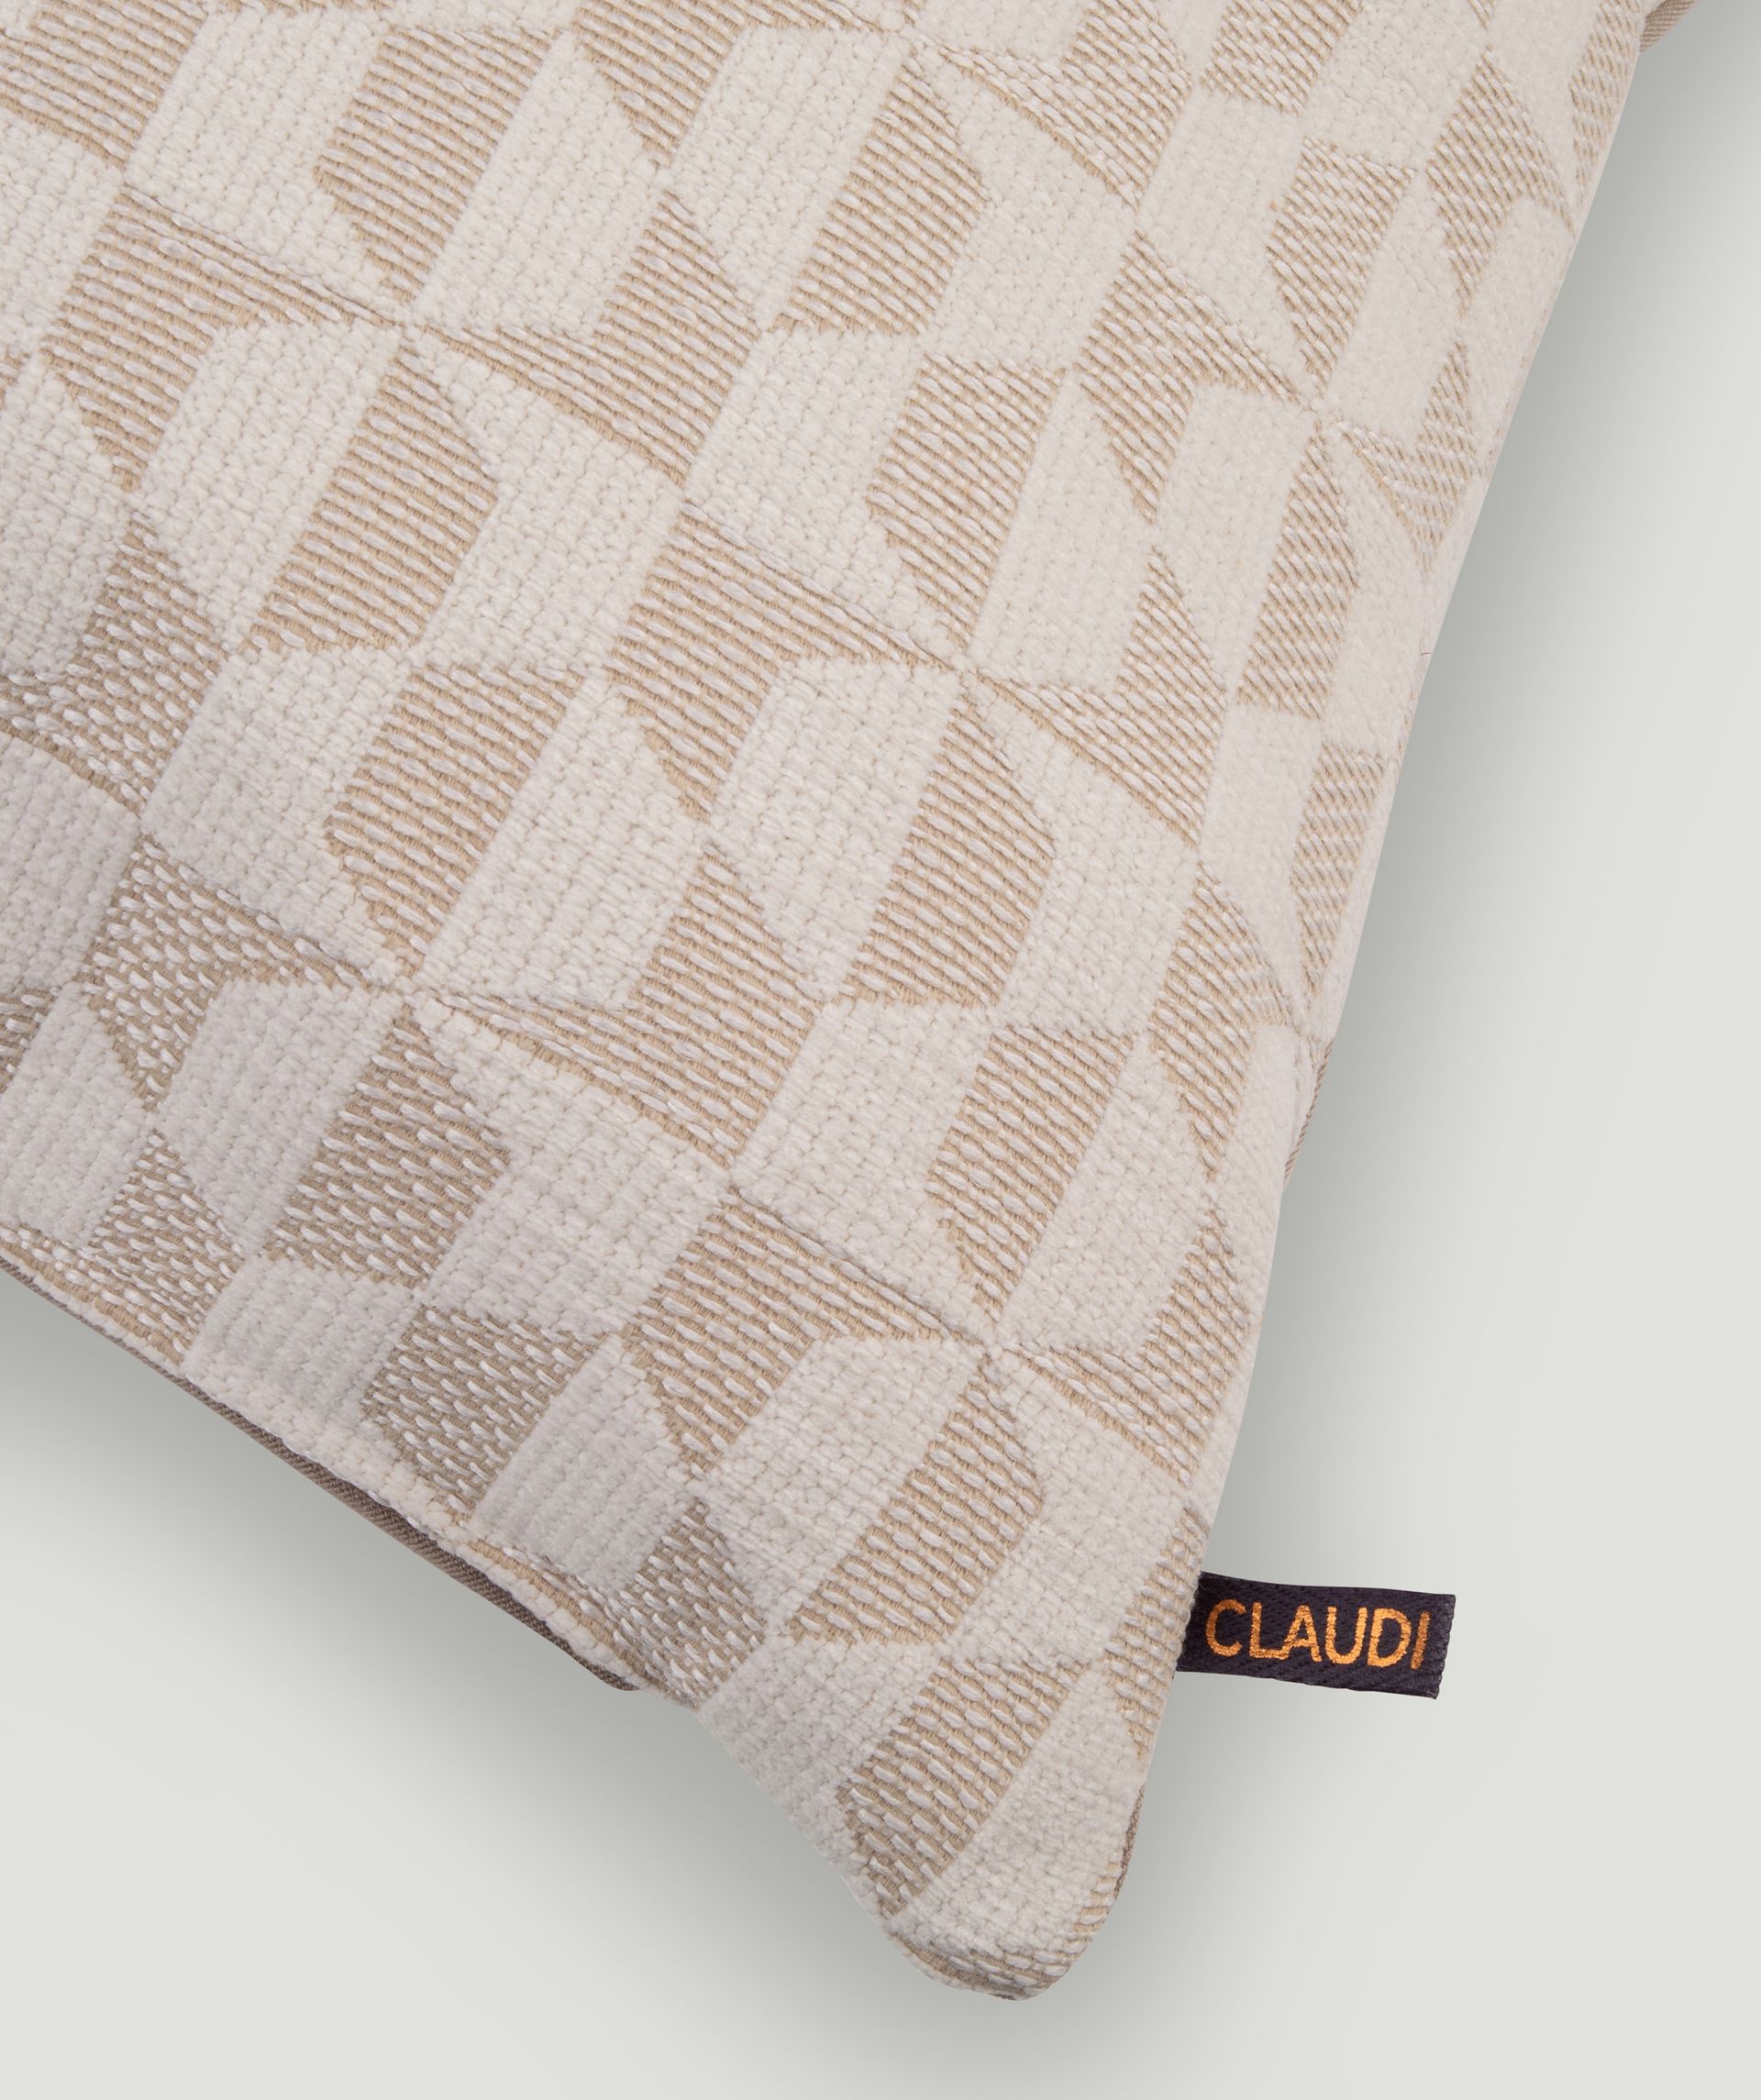 Gabri decorative cushion- CLAUDI